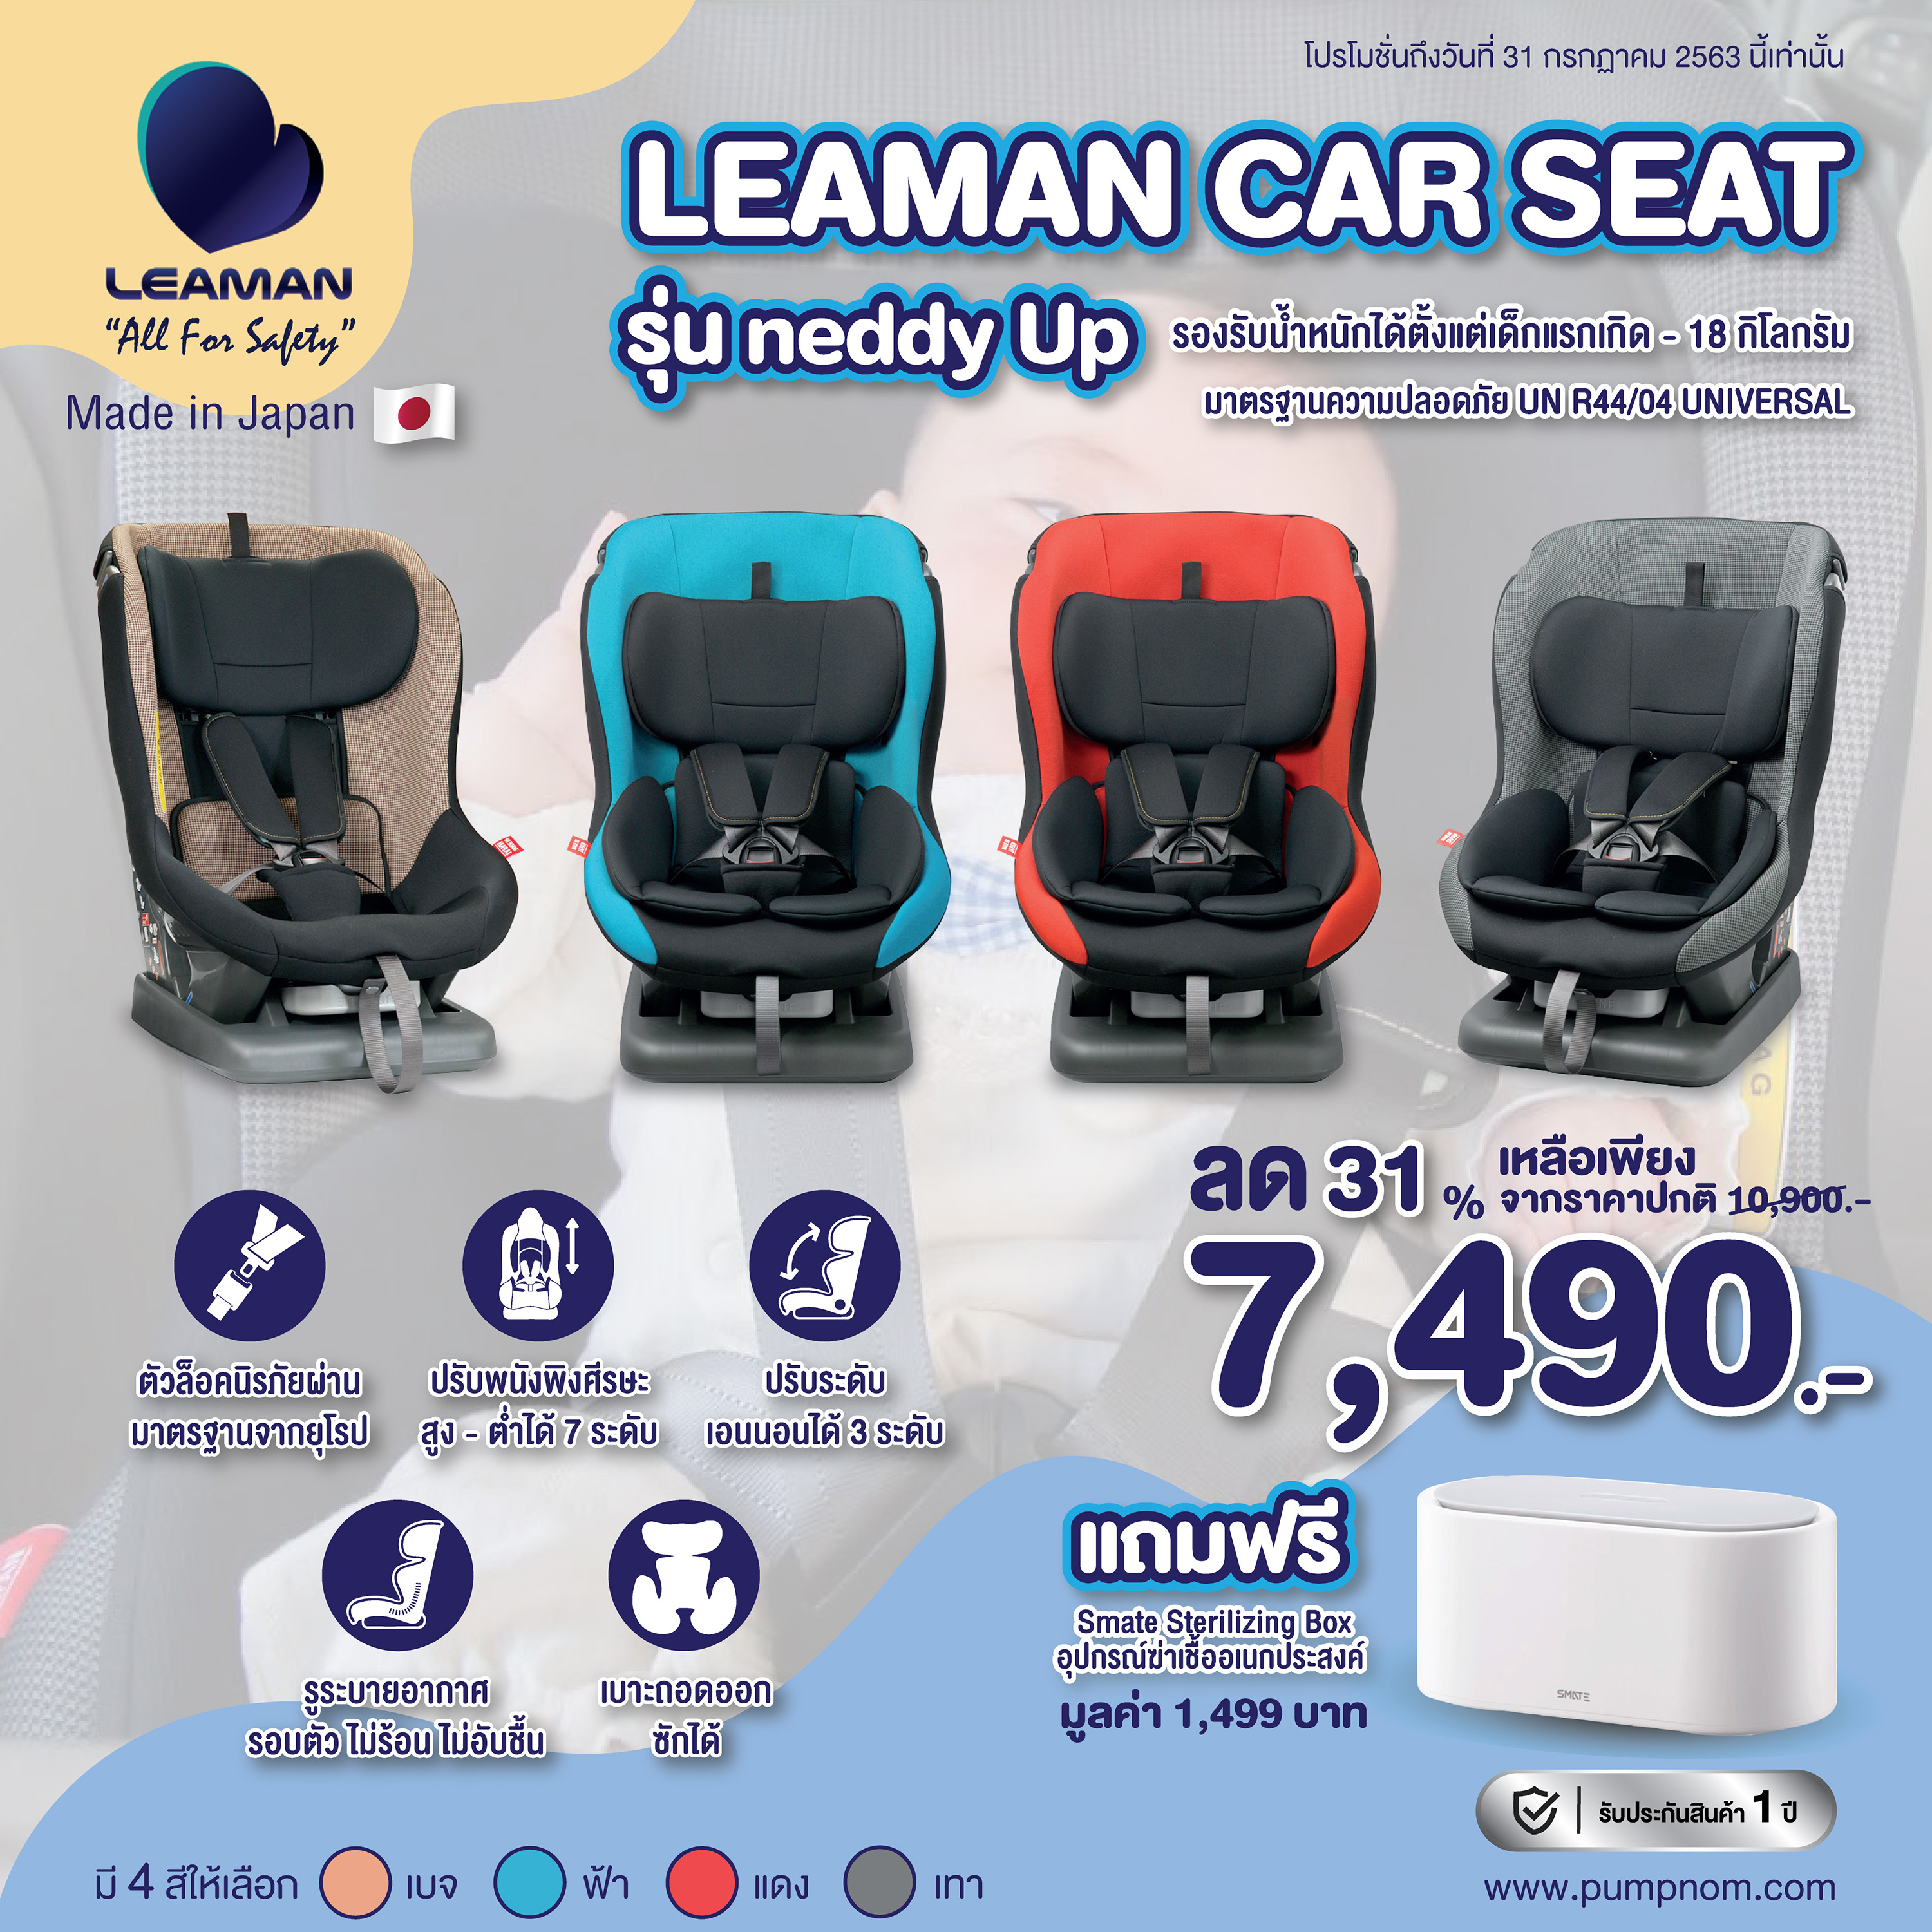 LEAMAN Car Seat จากญี่ปุ่น รุ่น neddy Up เหมาะสำหรับเด็กแรกเกิด จนถึงอายุ 4 ขวบ